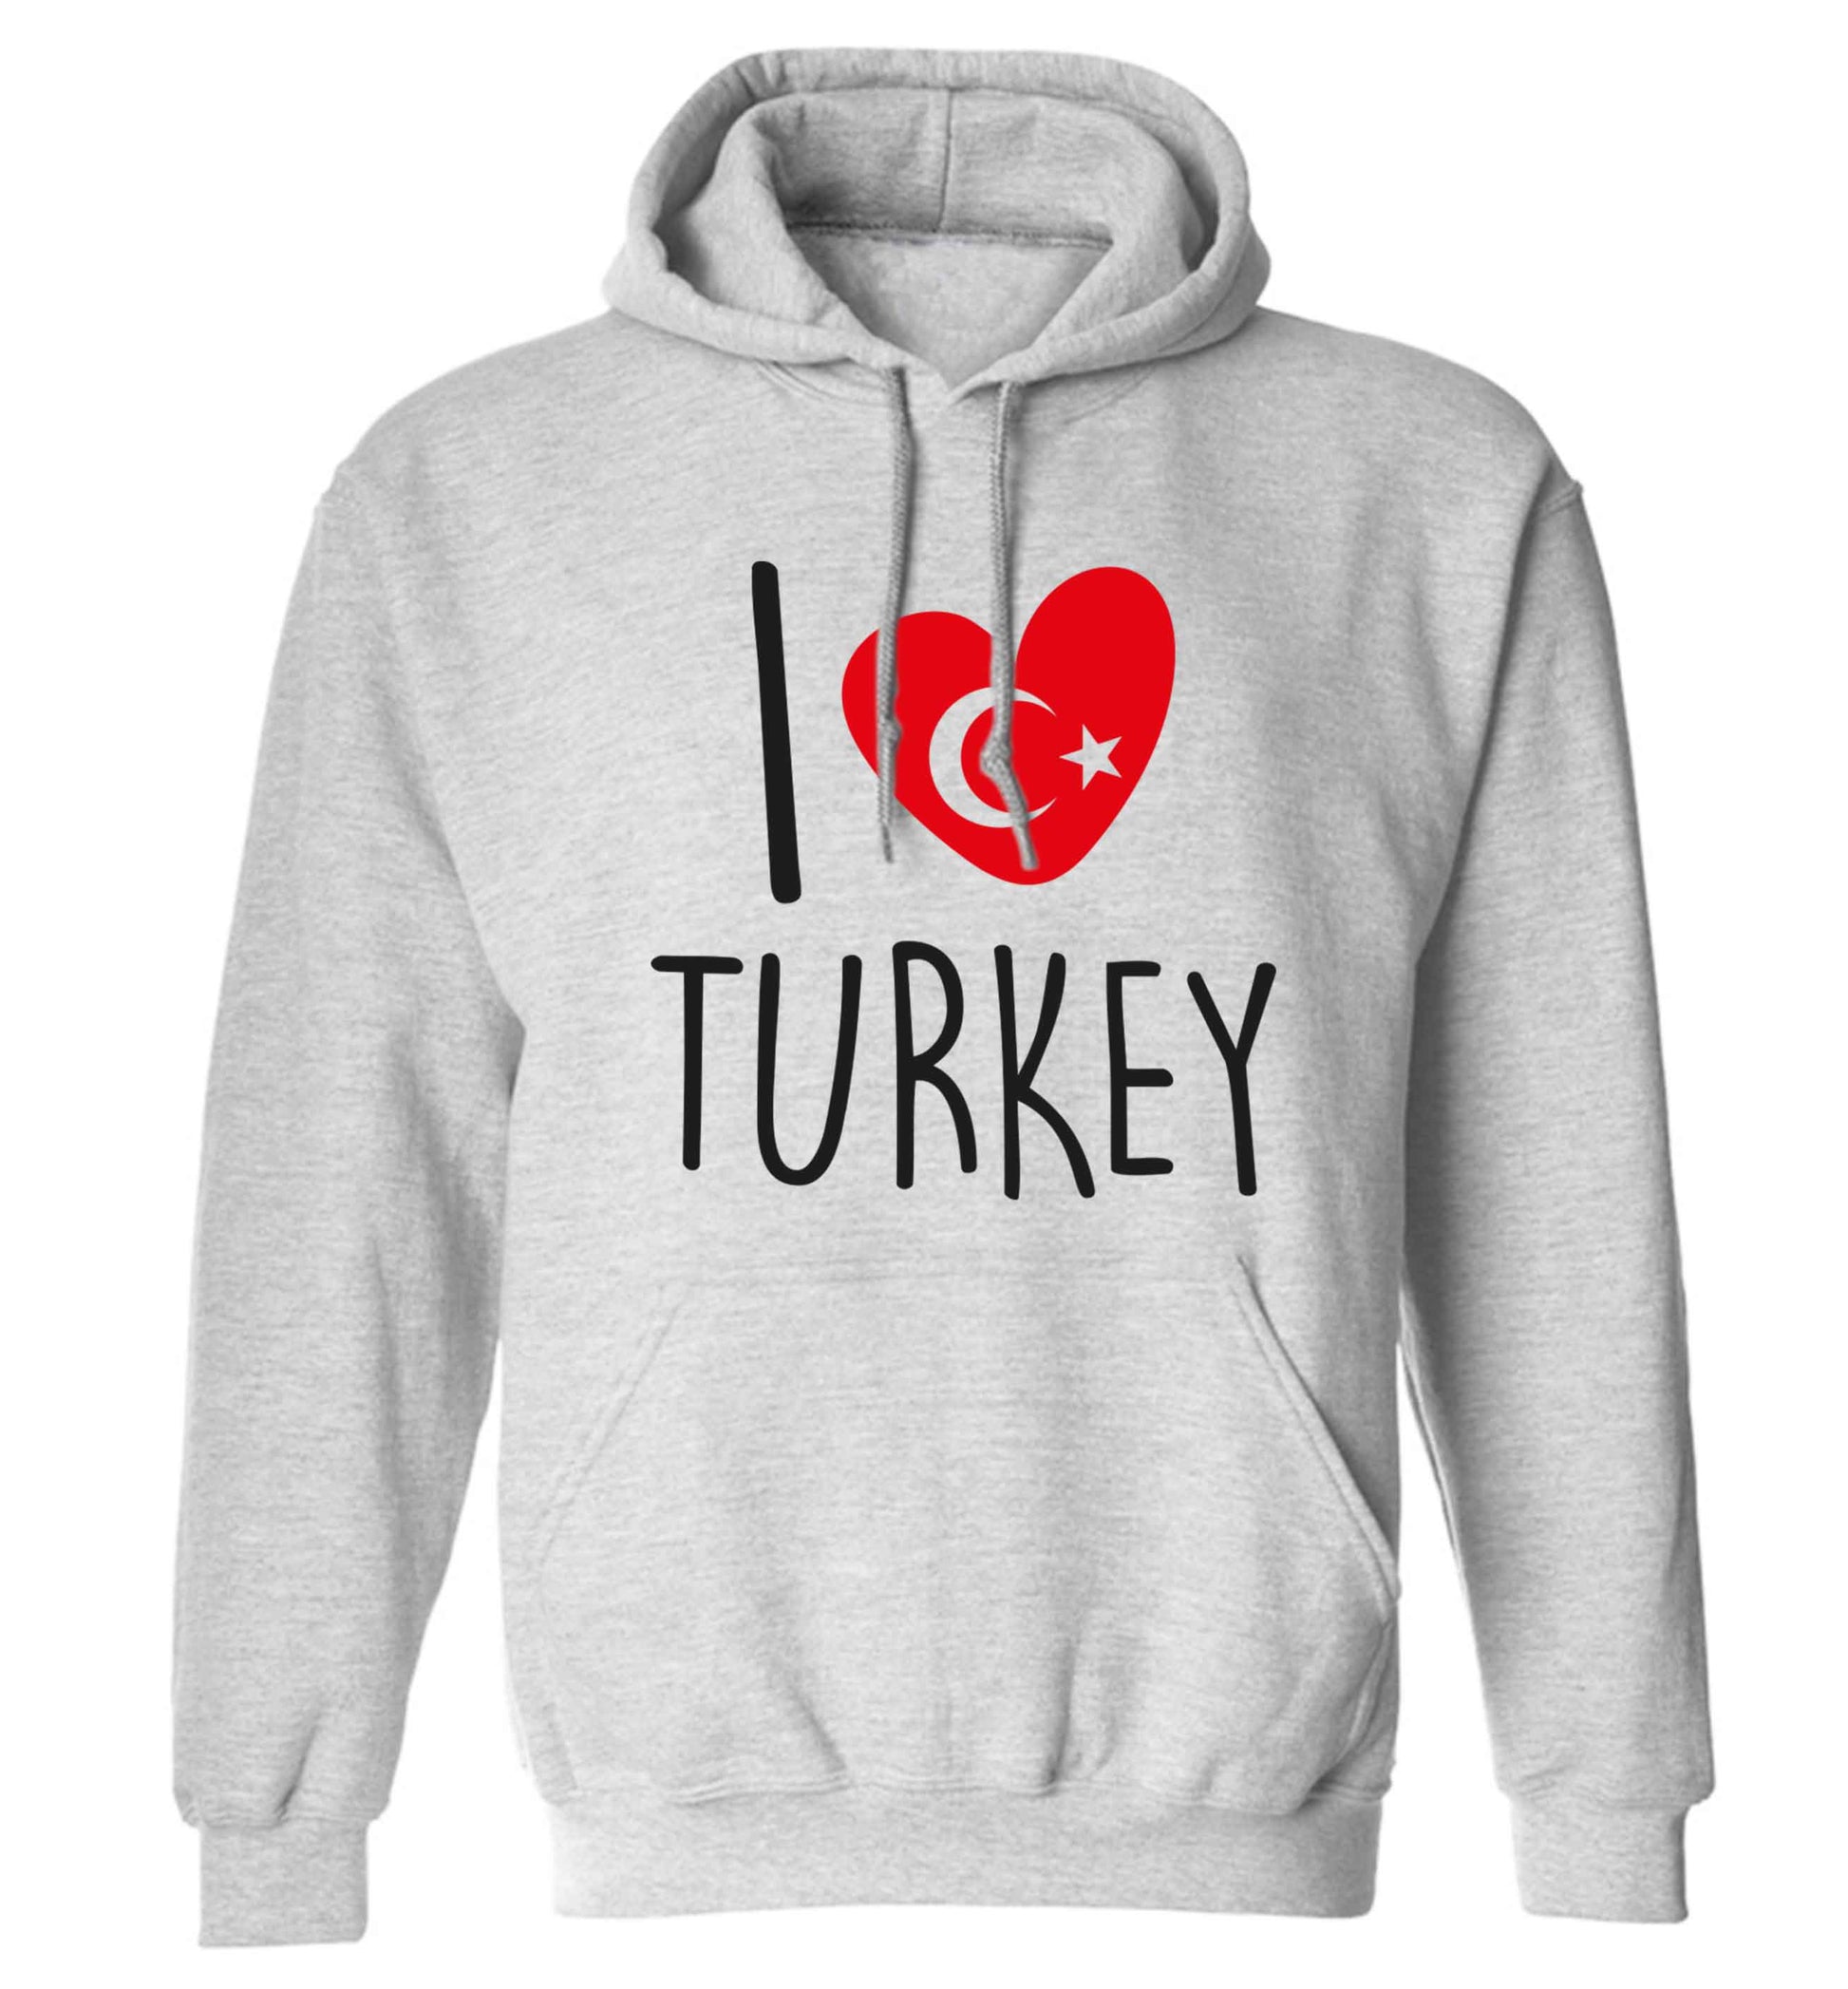 I love Turkey adults unisex grey hoodie 2XL